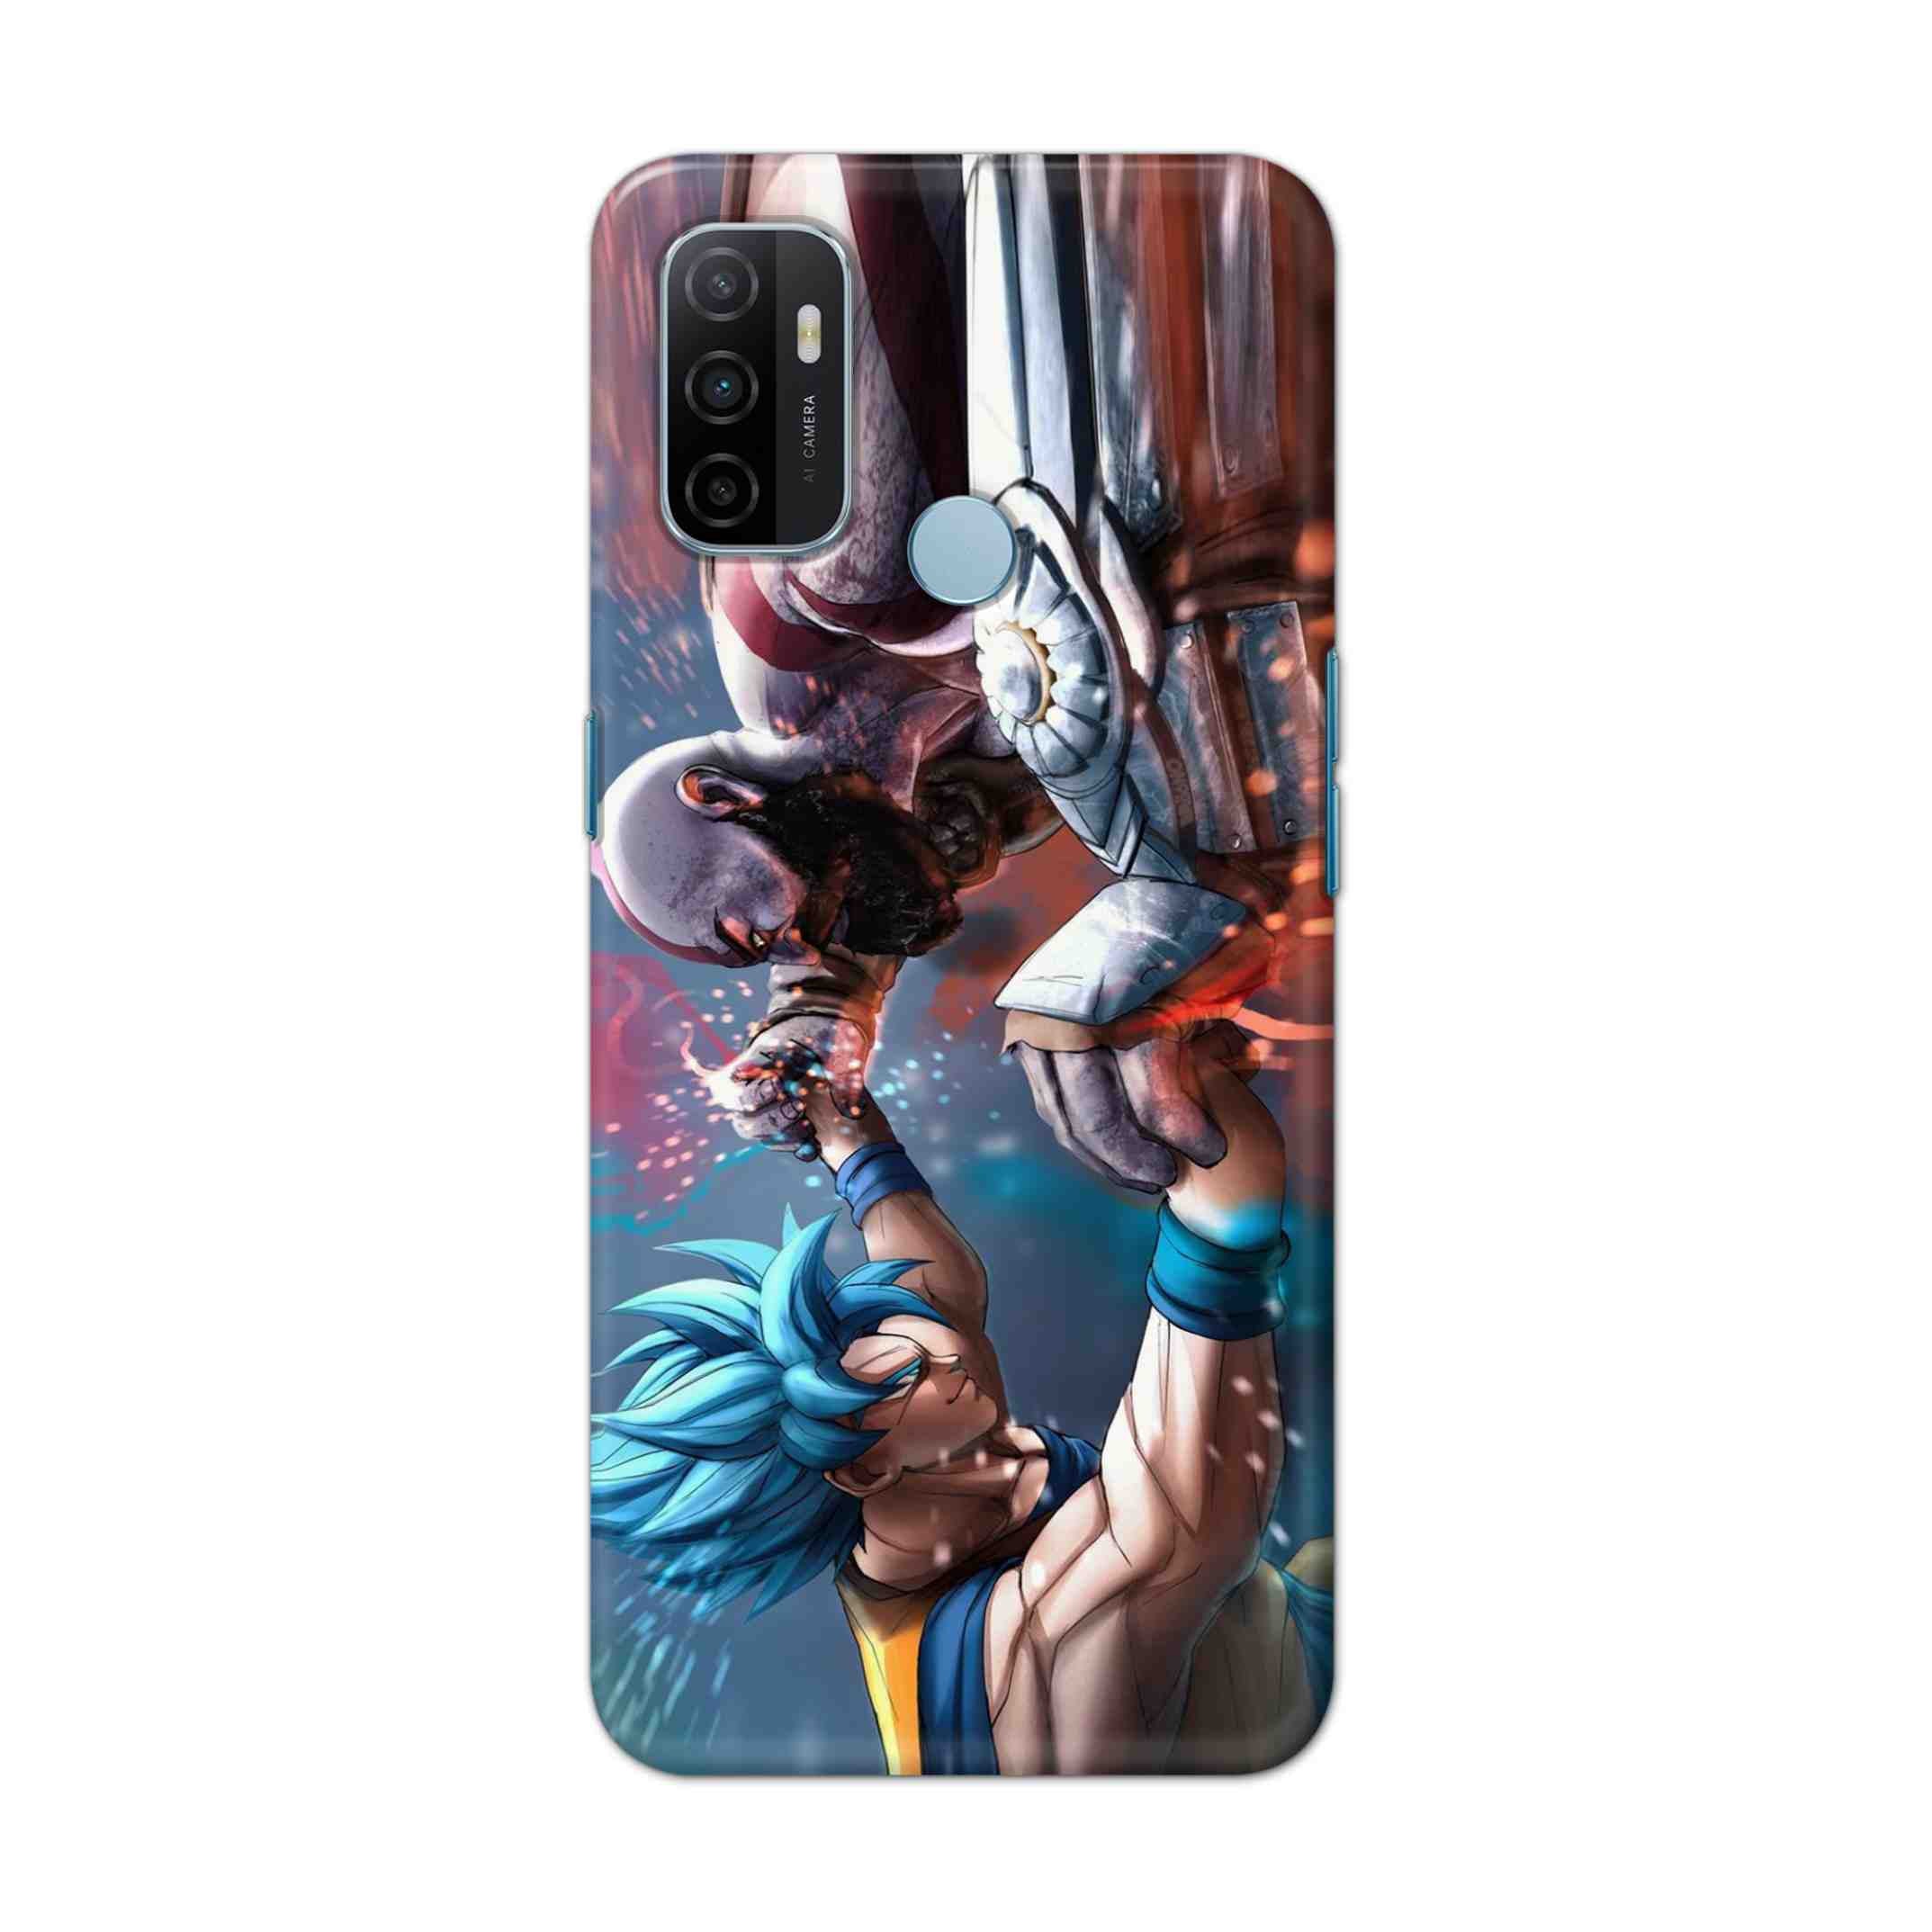 Buy Goku Vs Kratos Hard Back Mobile Phone Case Cover For OPPO A53 (2020) Online